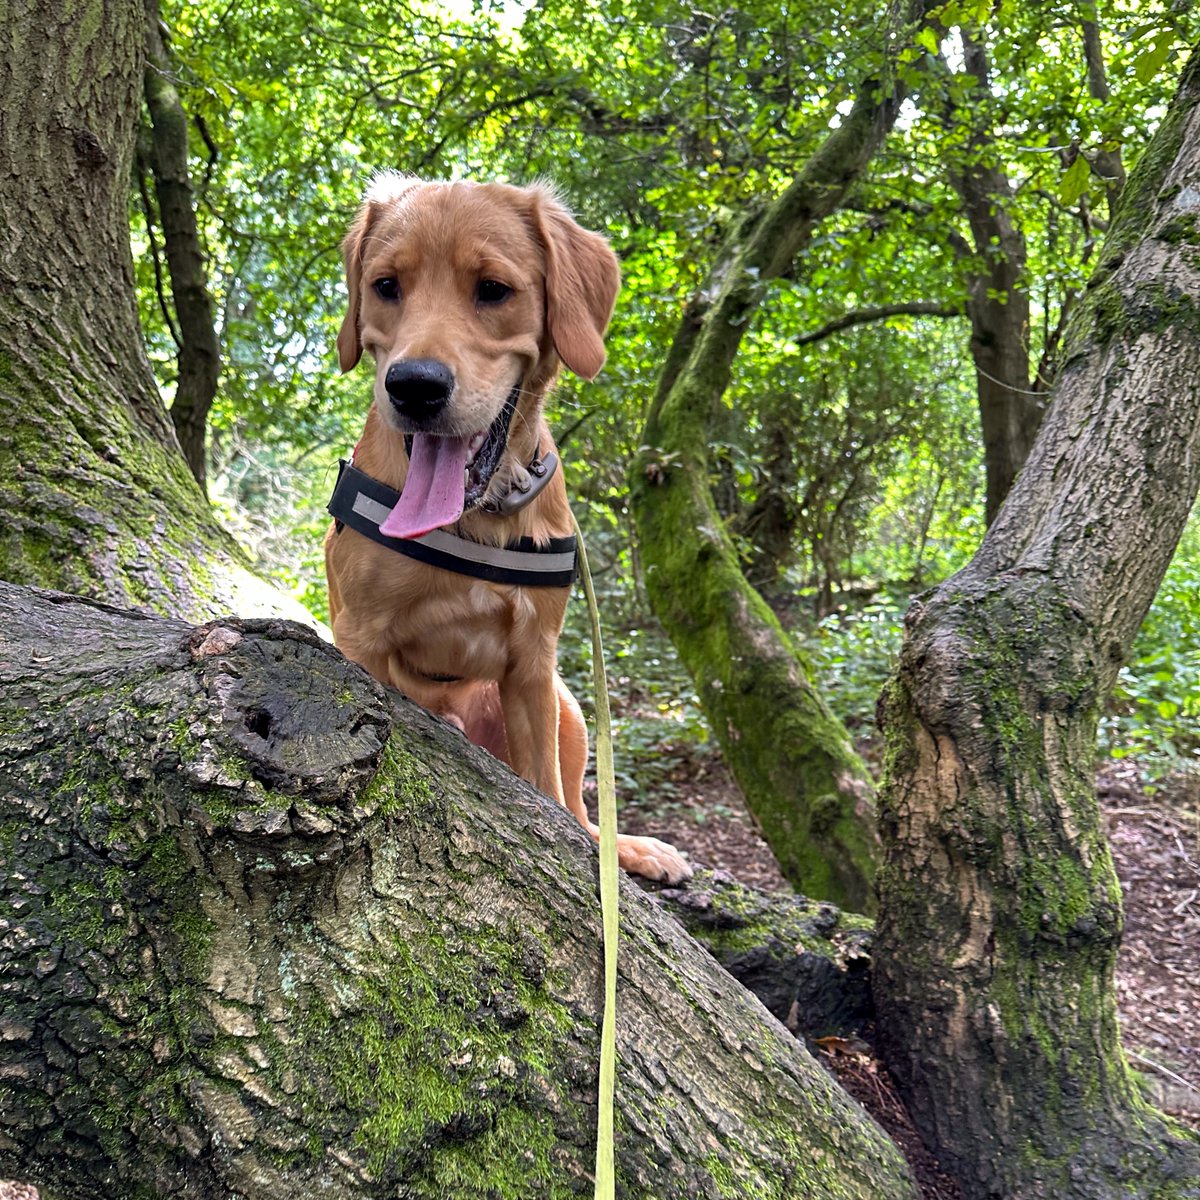 Lunchtime tree climbing #goldenretrievers #dogwalking #lunchtimewalks #petphotography #dogphotography #puppyphotos #goldenpuppy #redmoonshine #woodlandwalks